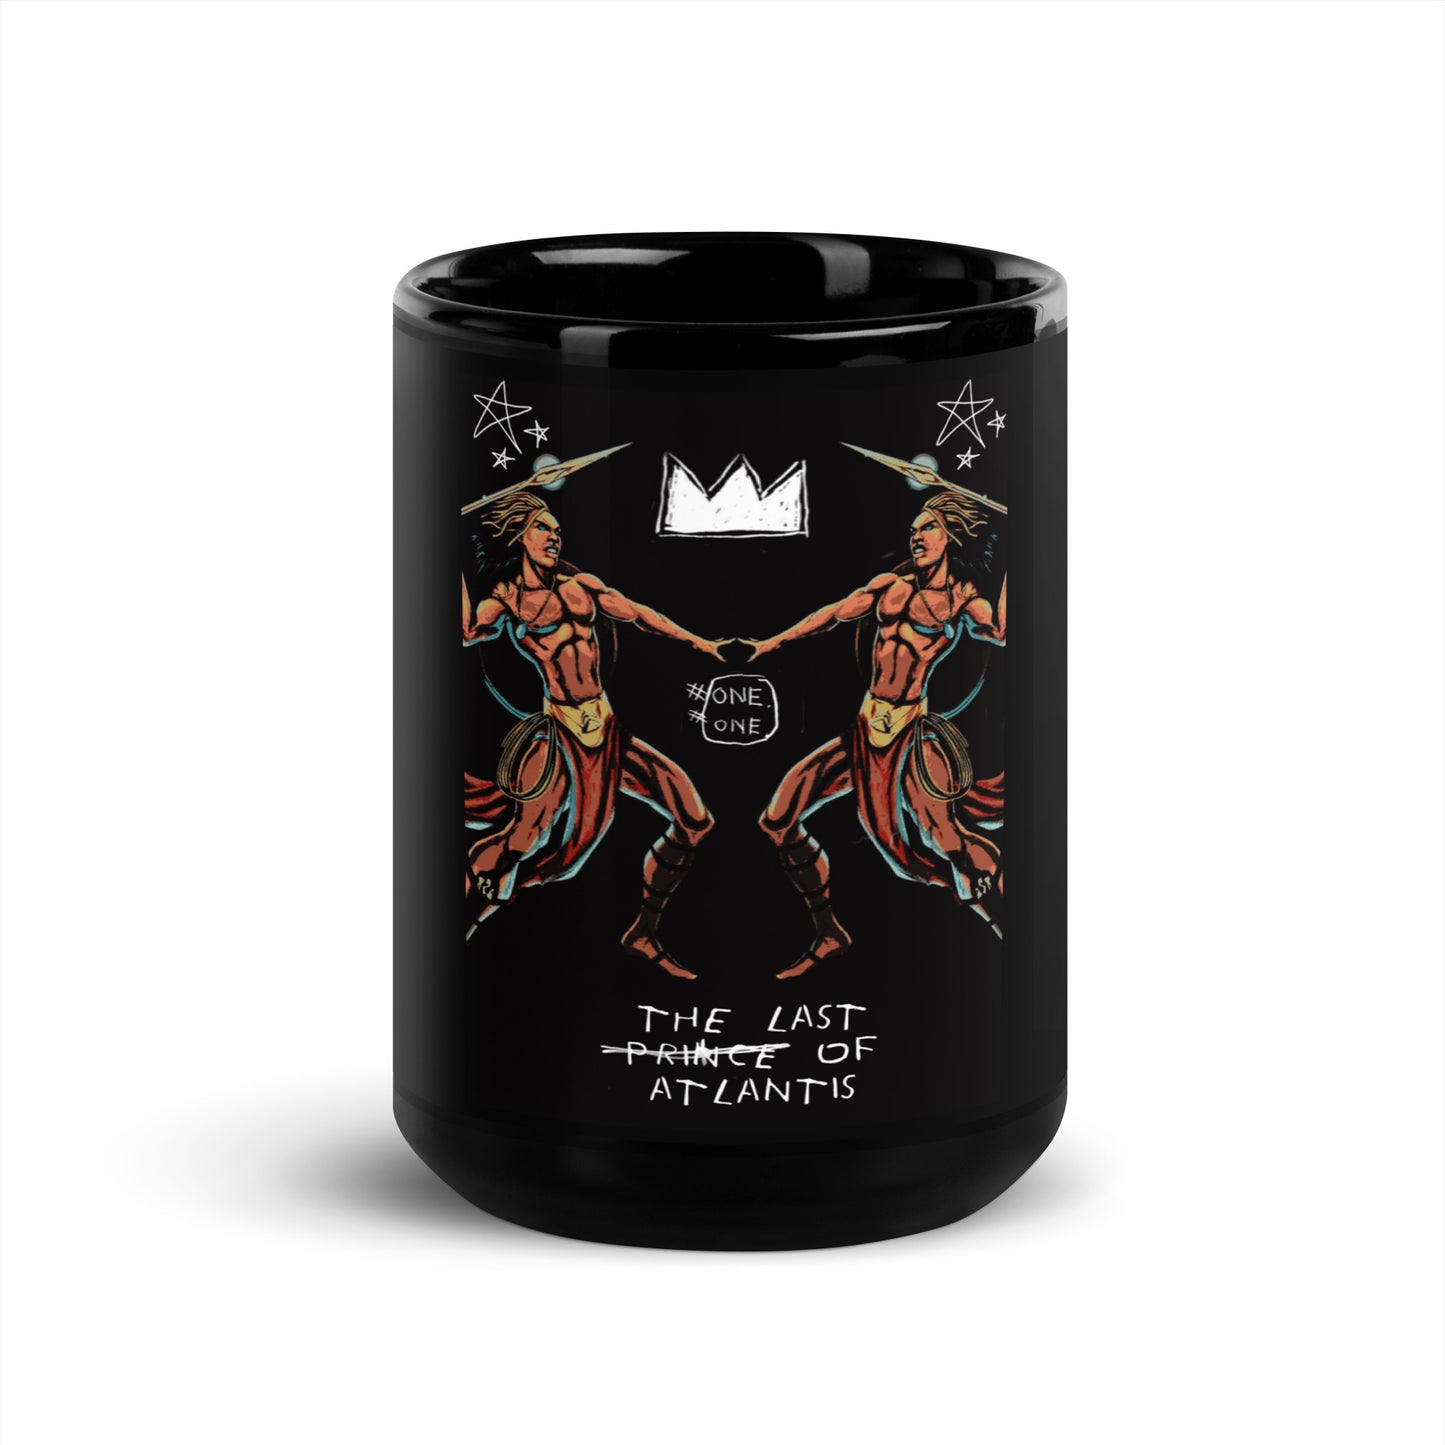 TLPA Jean-Michel Basquiat Inspired Black Glossy Mug - SHOPTLPA.COM